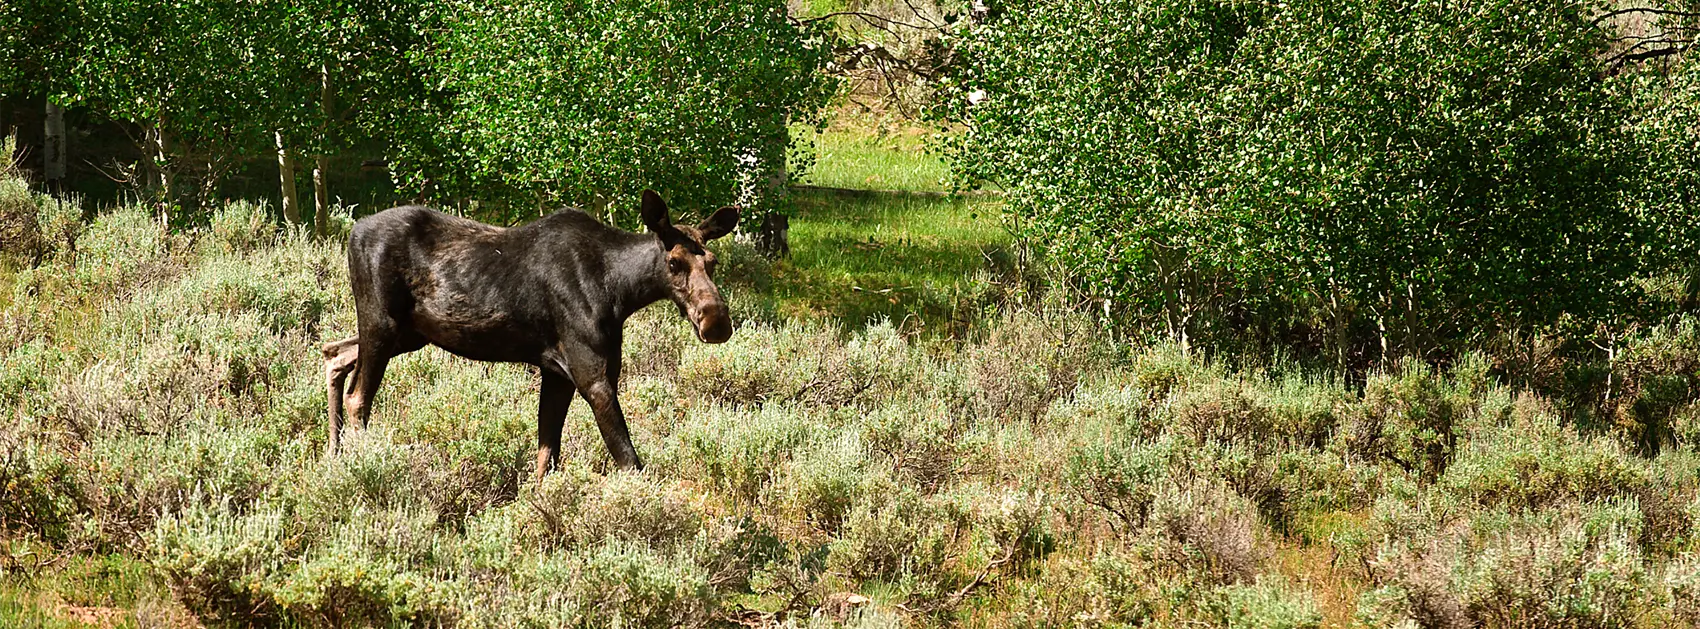 Wildlife: Moose near Scofield Reservoir